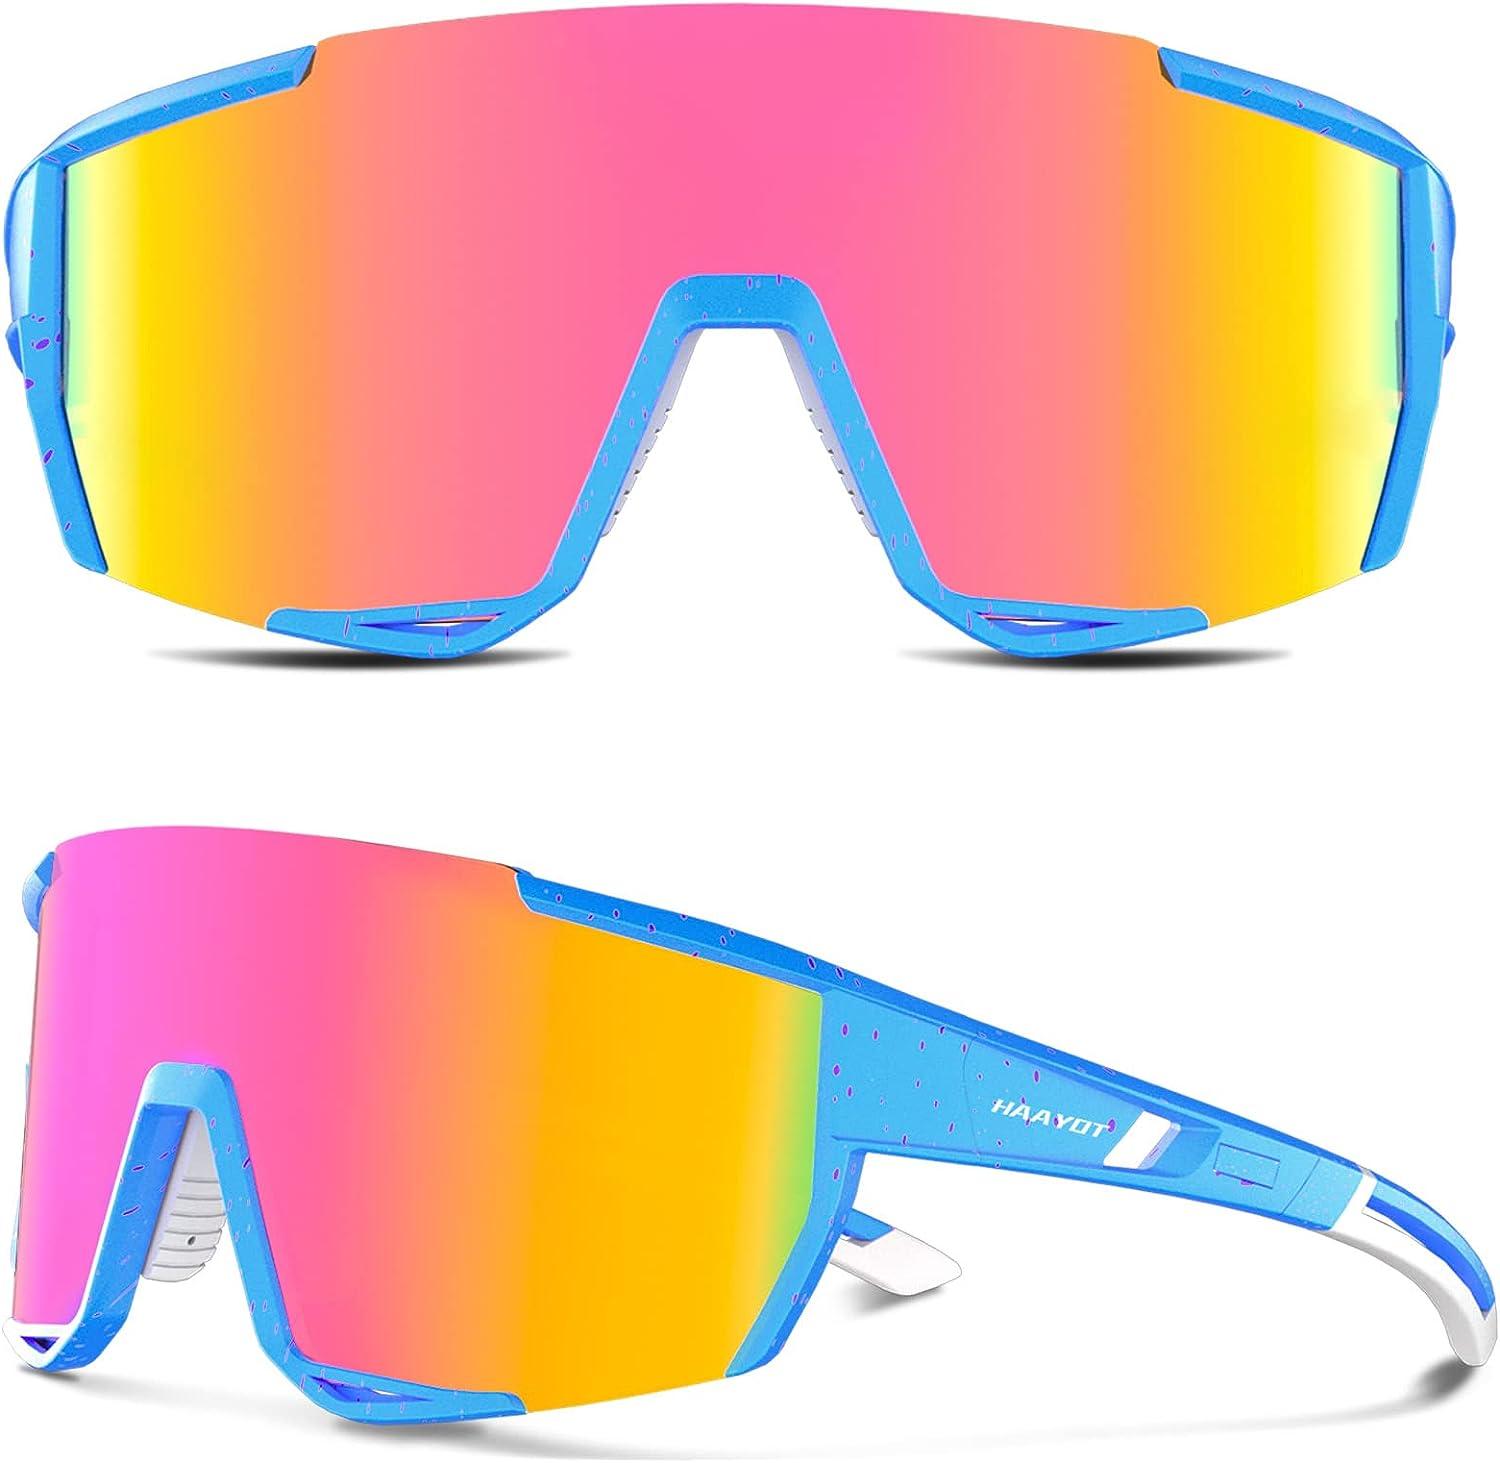 HAAYOT Polarized Cycling Glasses,Sports Sunglasses for Men Women,Baseball  Biking Running Fishing Sunglasses with 5 Interchangeable Lenses Vermilion  Orange, Glasses -  Canada